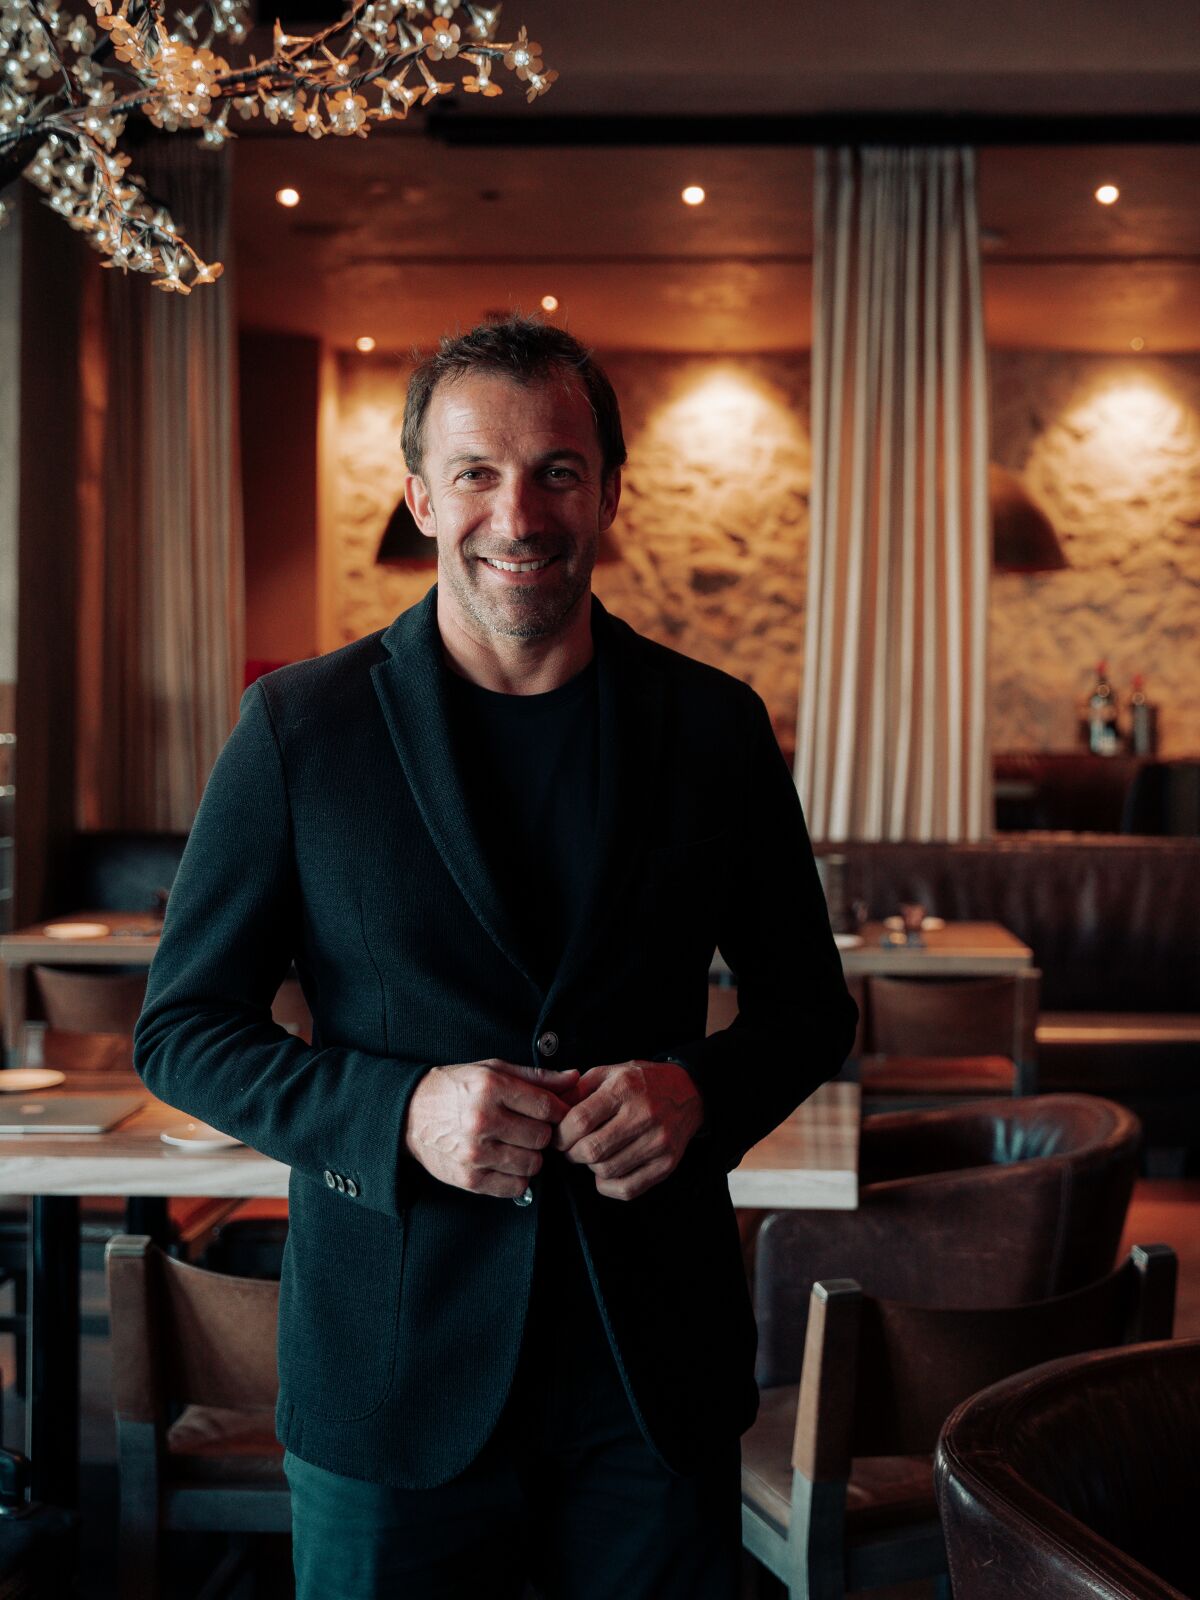 Former Italian soccer star Alessandro Del Piero stands in his restaurant n10.